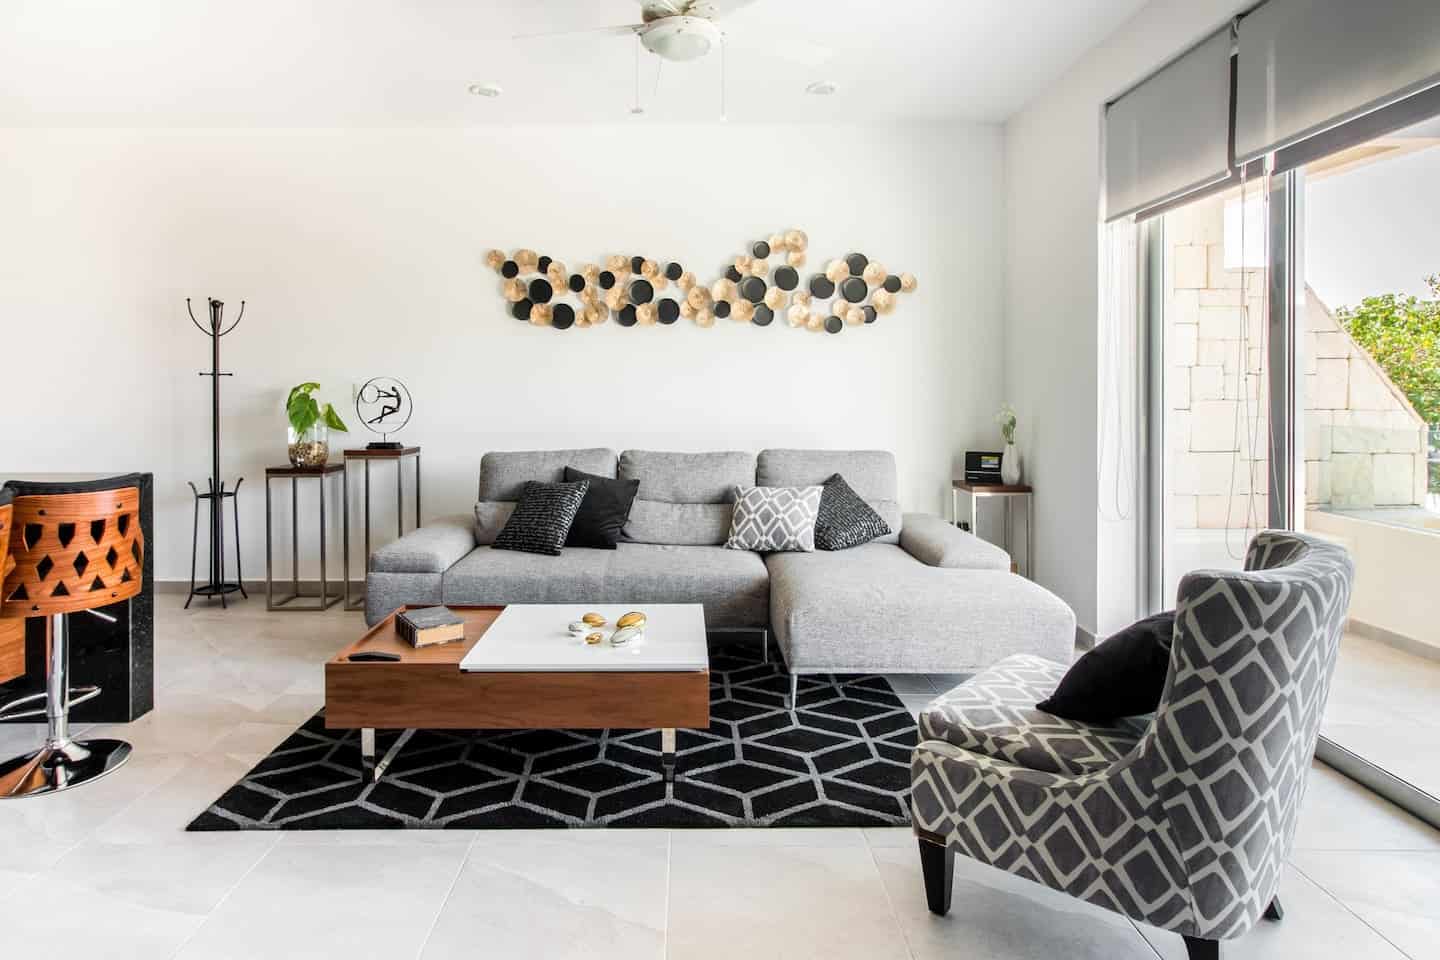 Image of Airbnb rental in Playa del Carmen, Mexico